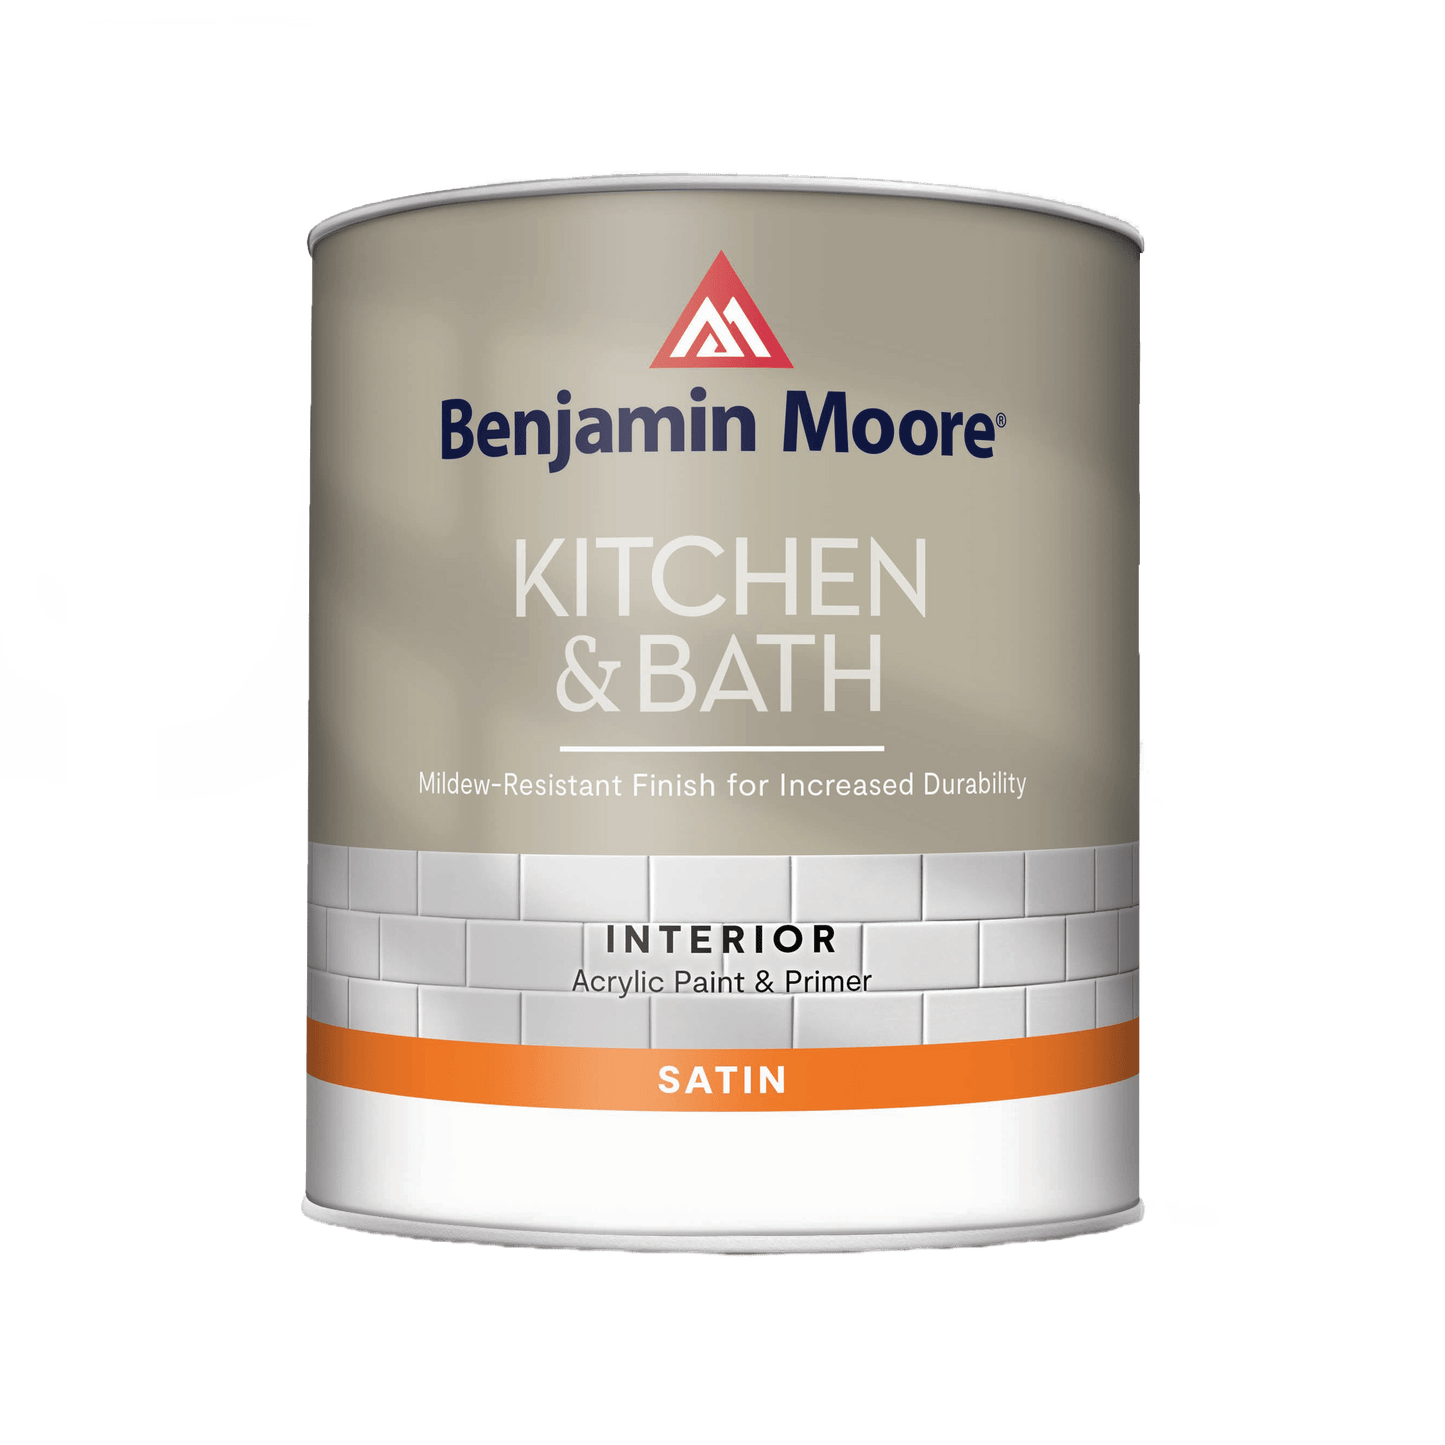 Benjamin Moore Kitchen and Bath - Rossi Paint Stores - Satin - Quart